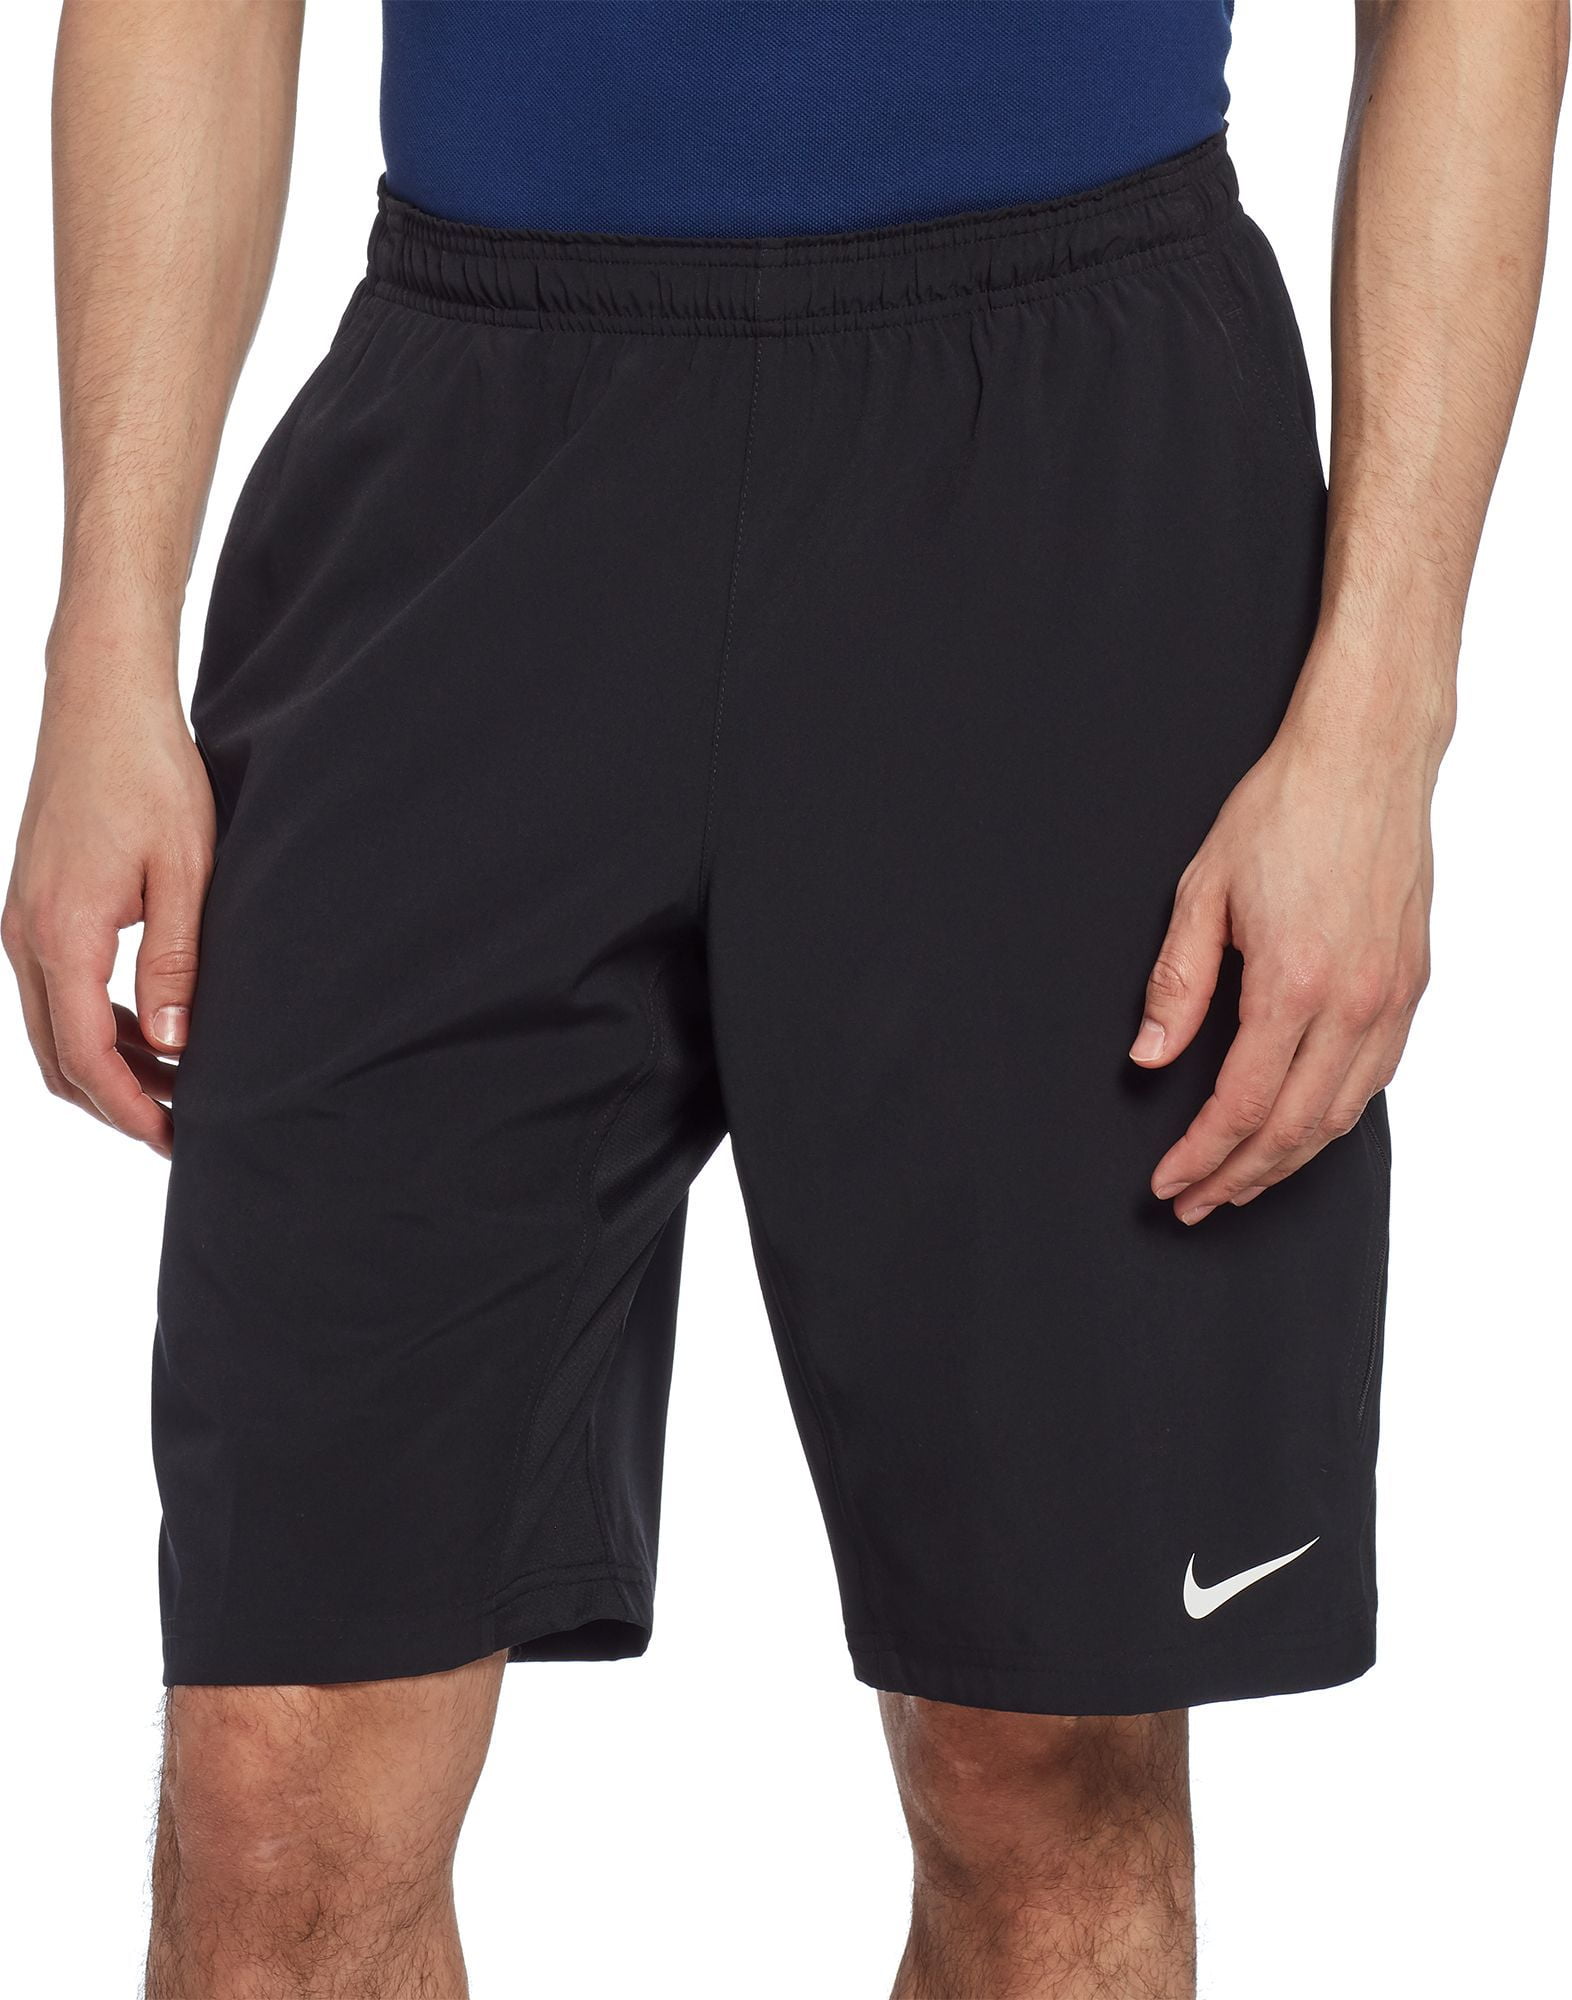 Woven Tennis Shorts, Black 